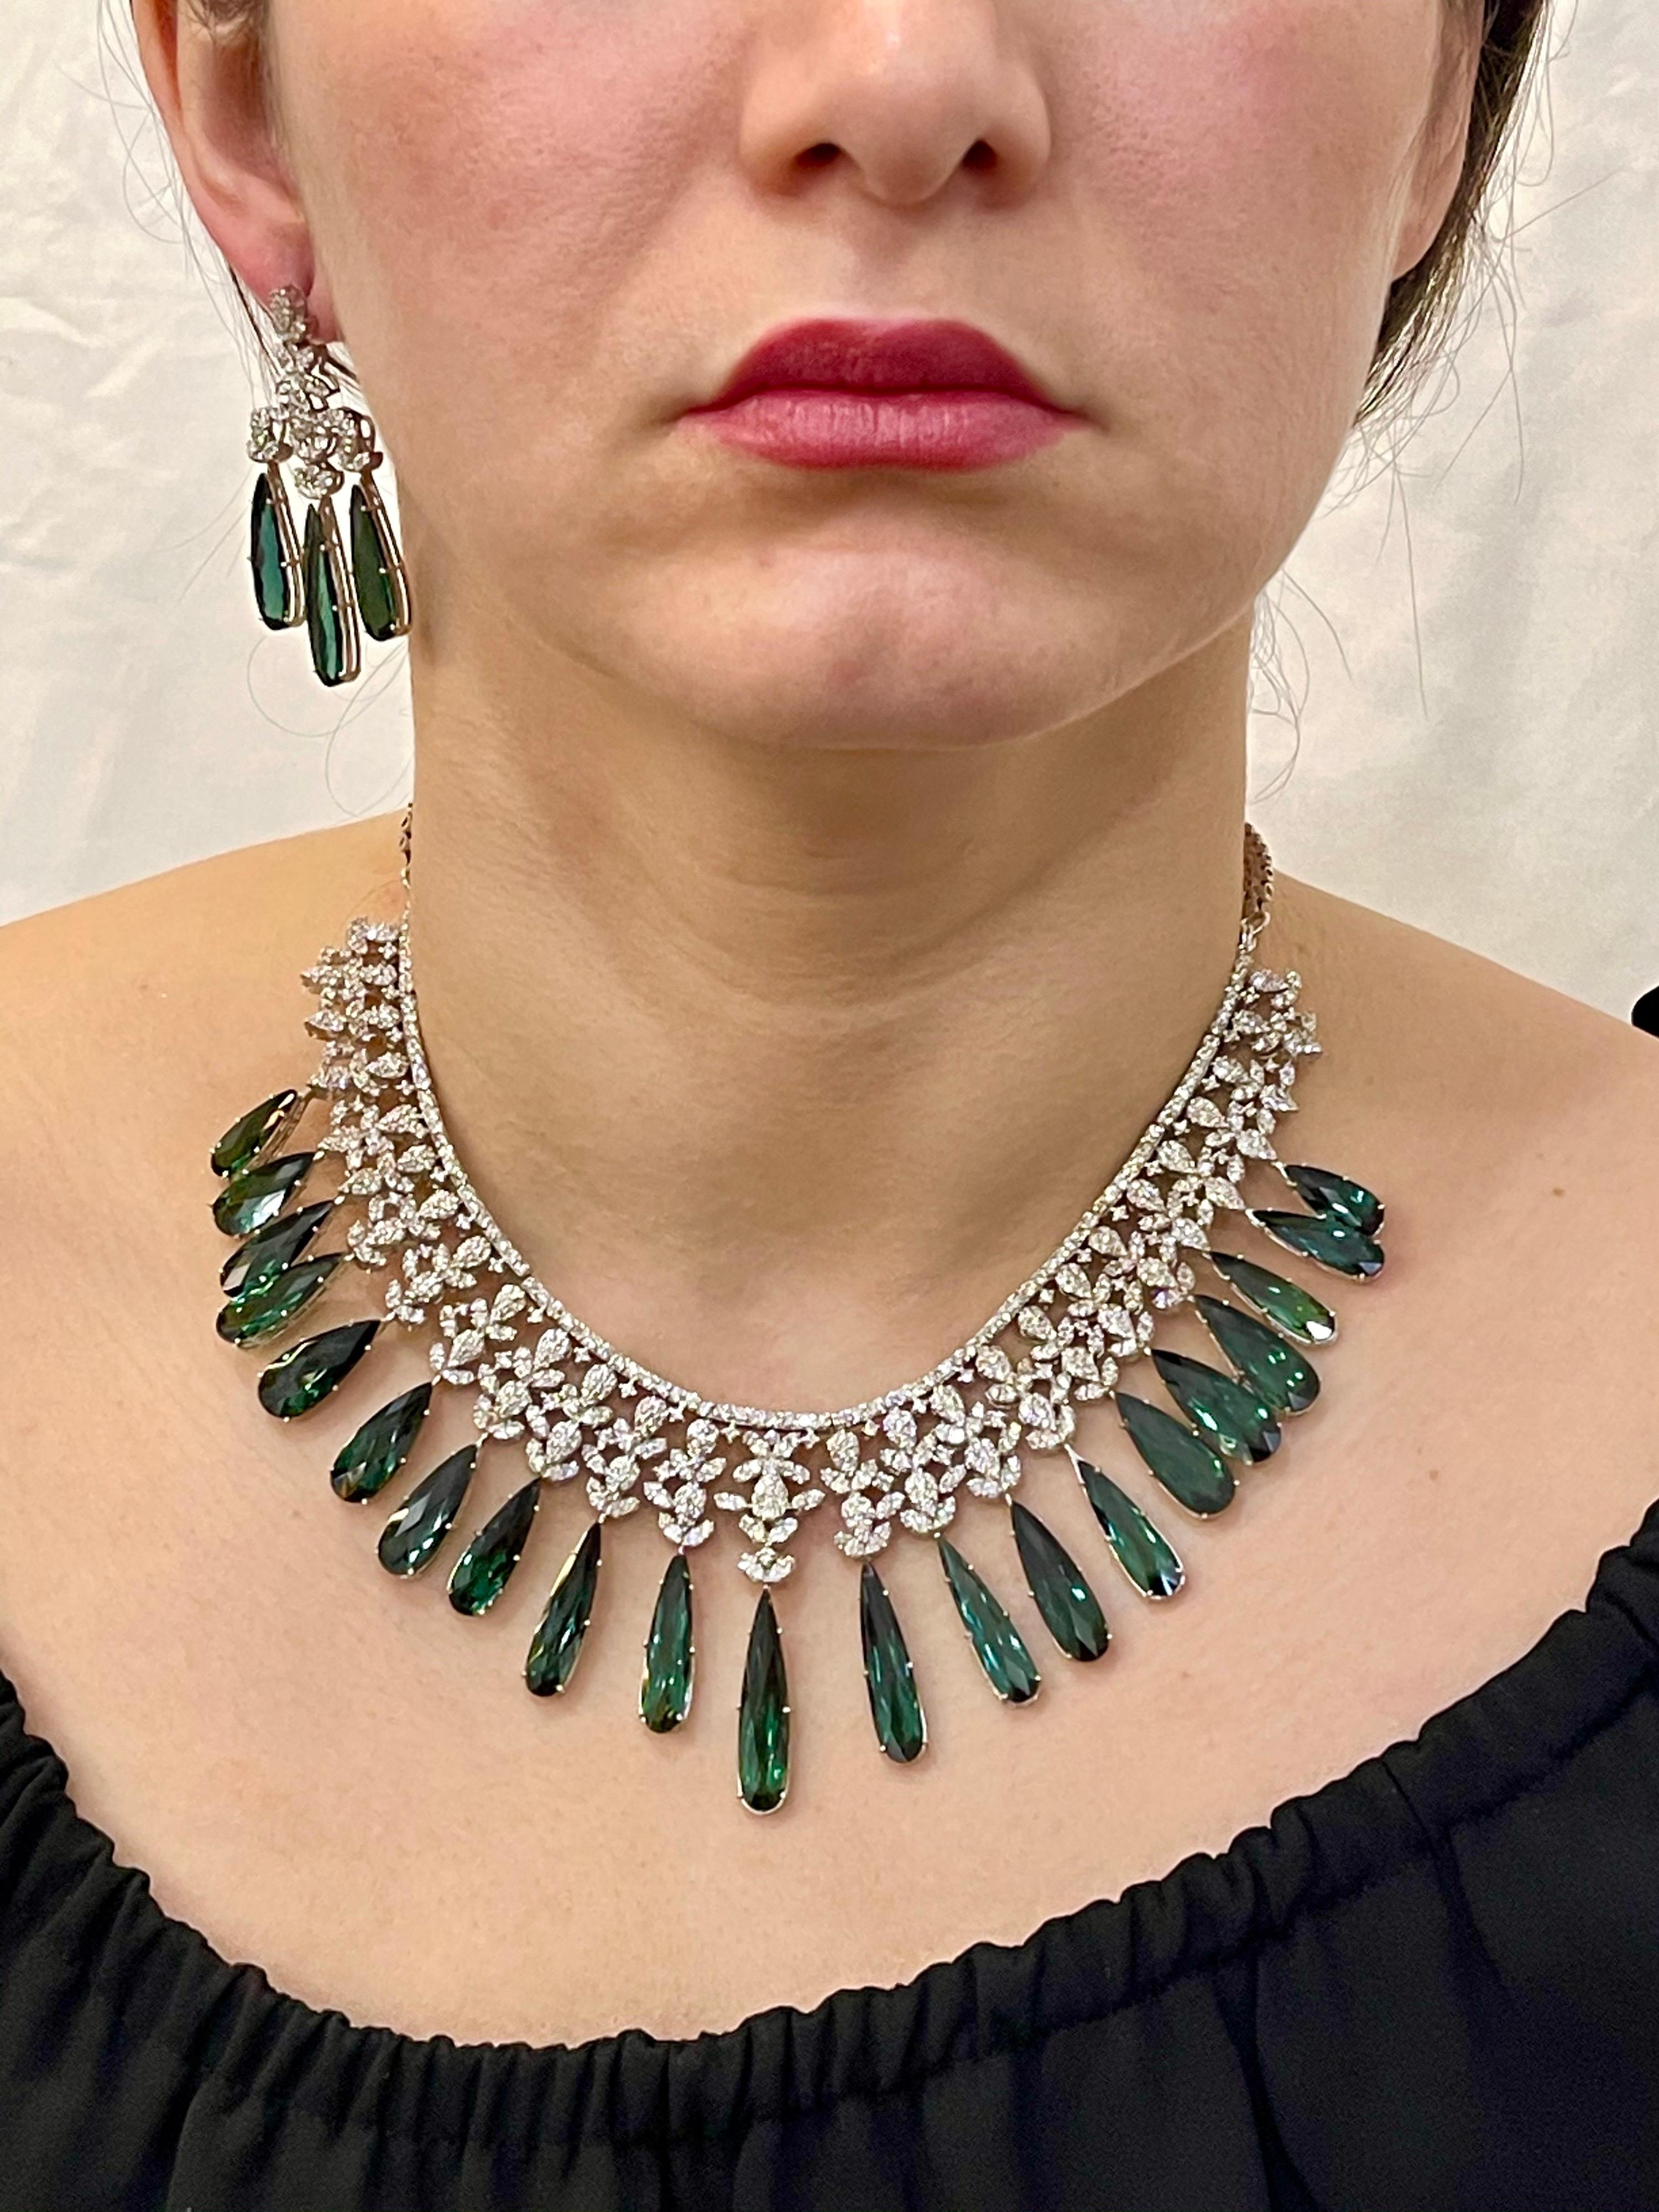 110 Carat Tear Drop Green Tourmaline and 25 Ct Diamond Necklace Suite 18 K Gold For Sale 8